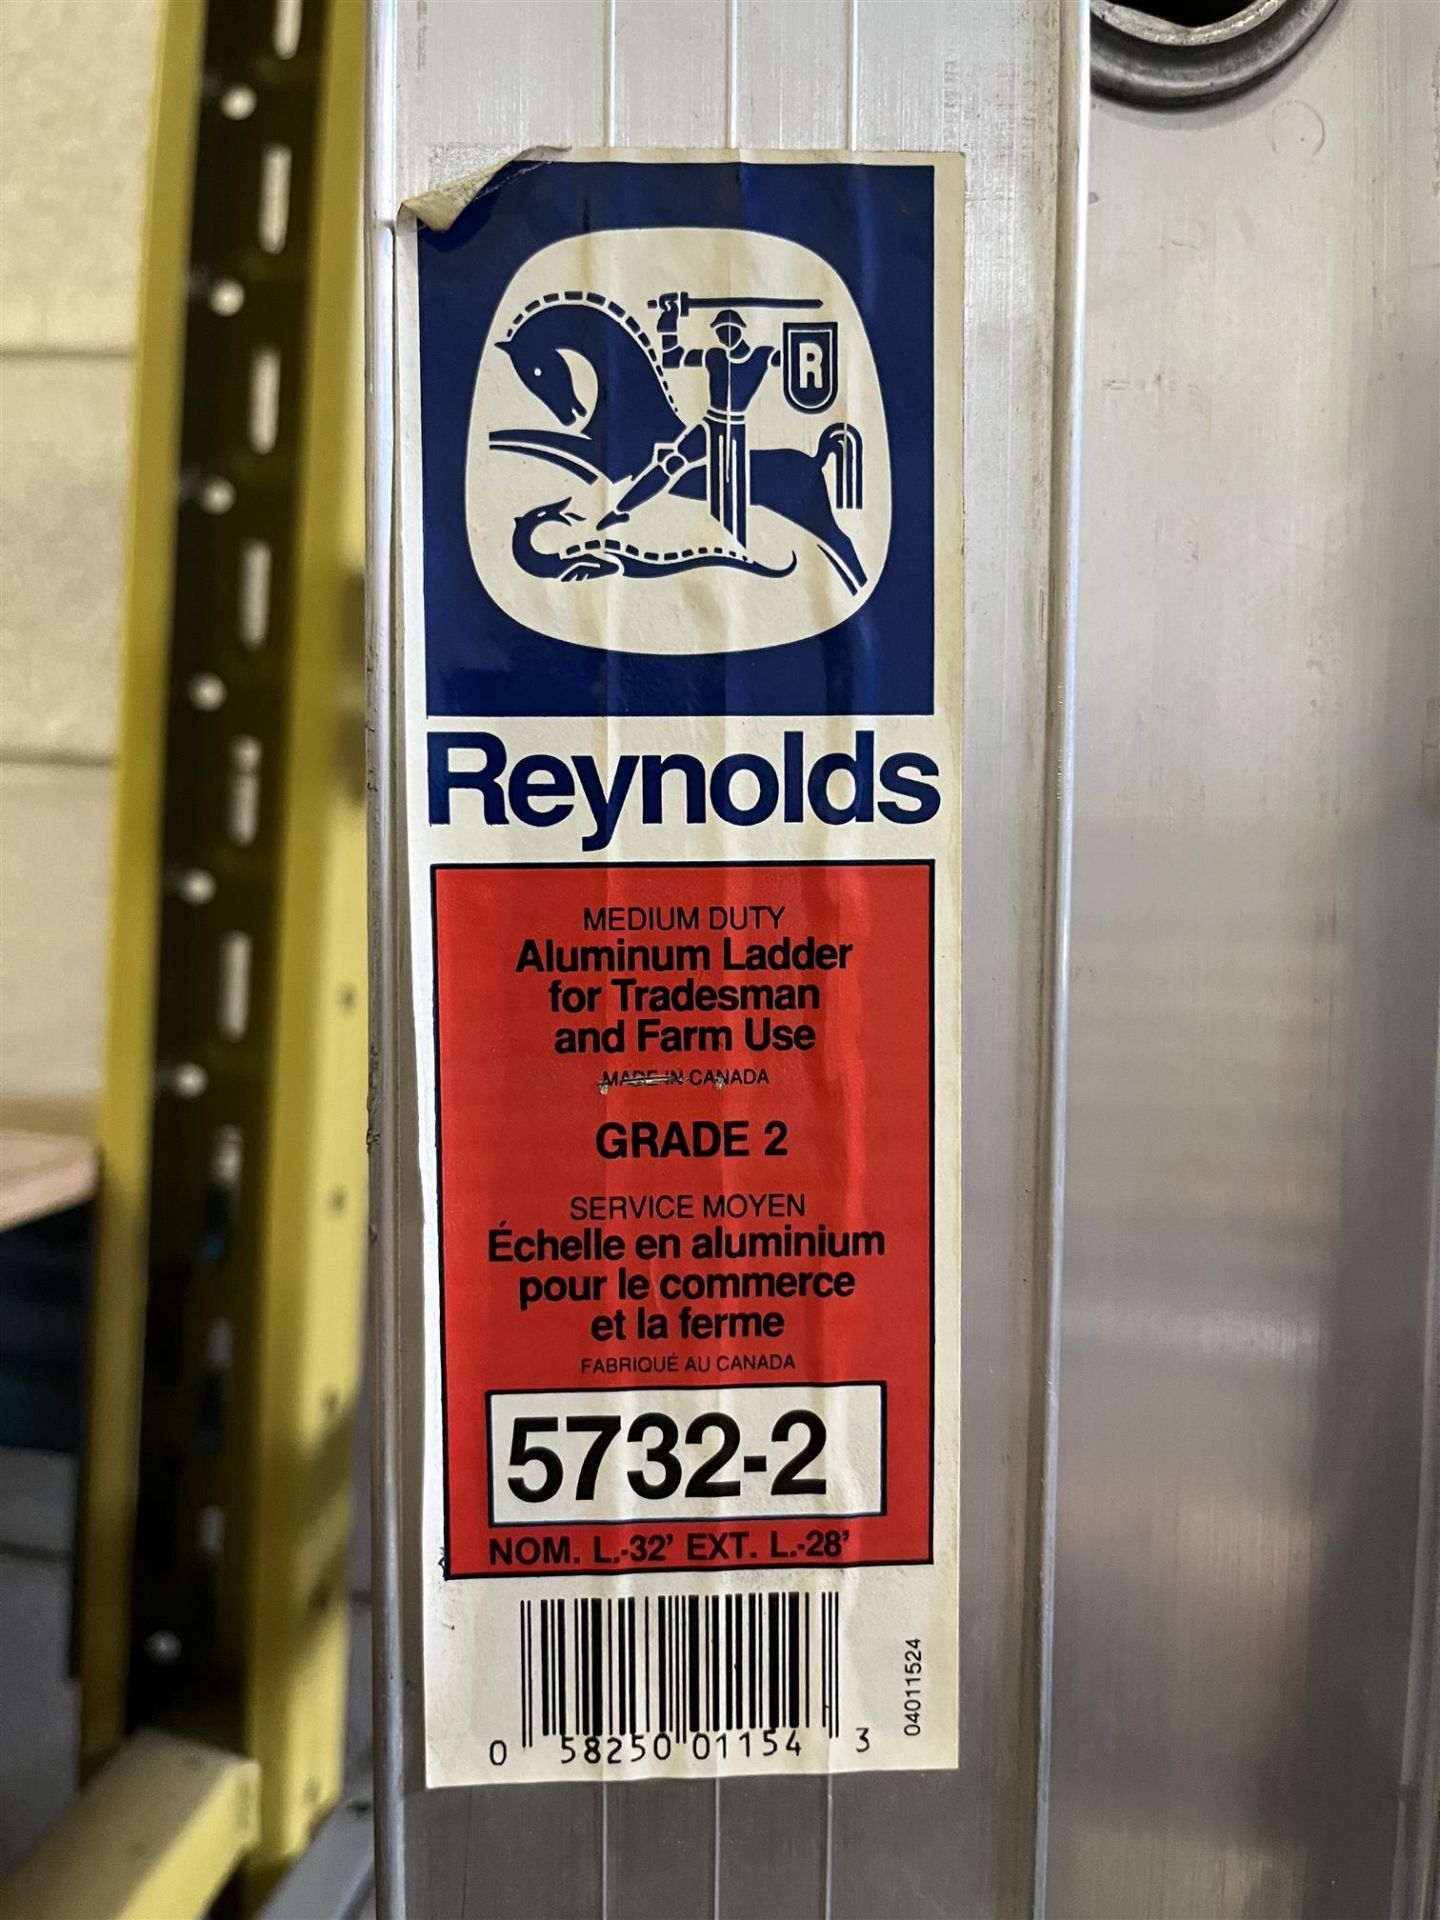 Reynolds Medium Duty Aluminum Extention Ladder - 5732-2 - 32' - 60' - Image 2 of 2